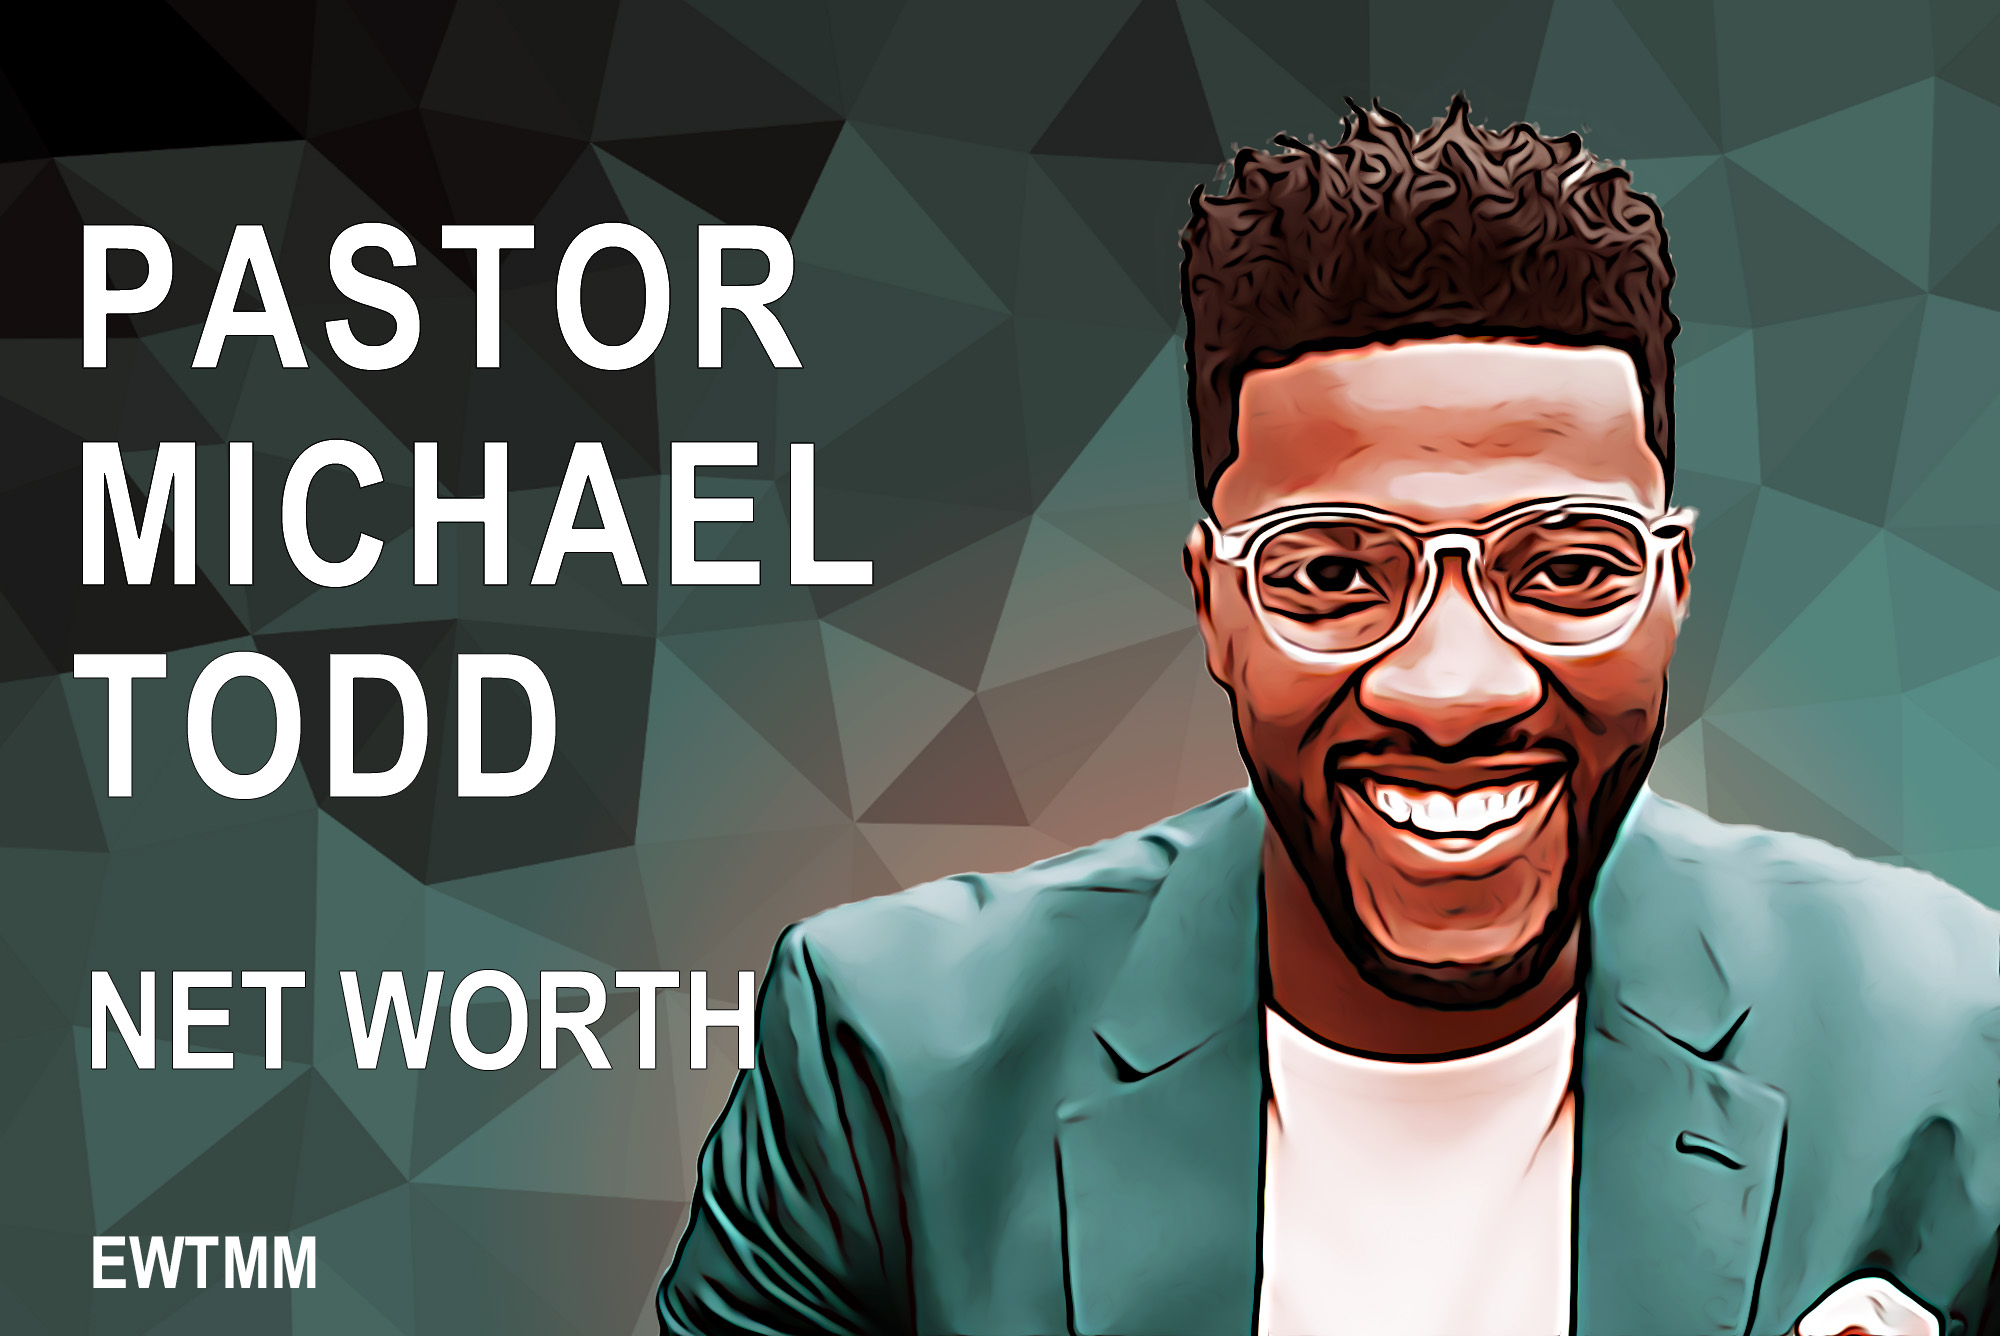 Pastor Michael Todd net worth